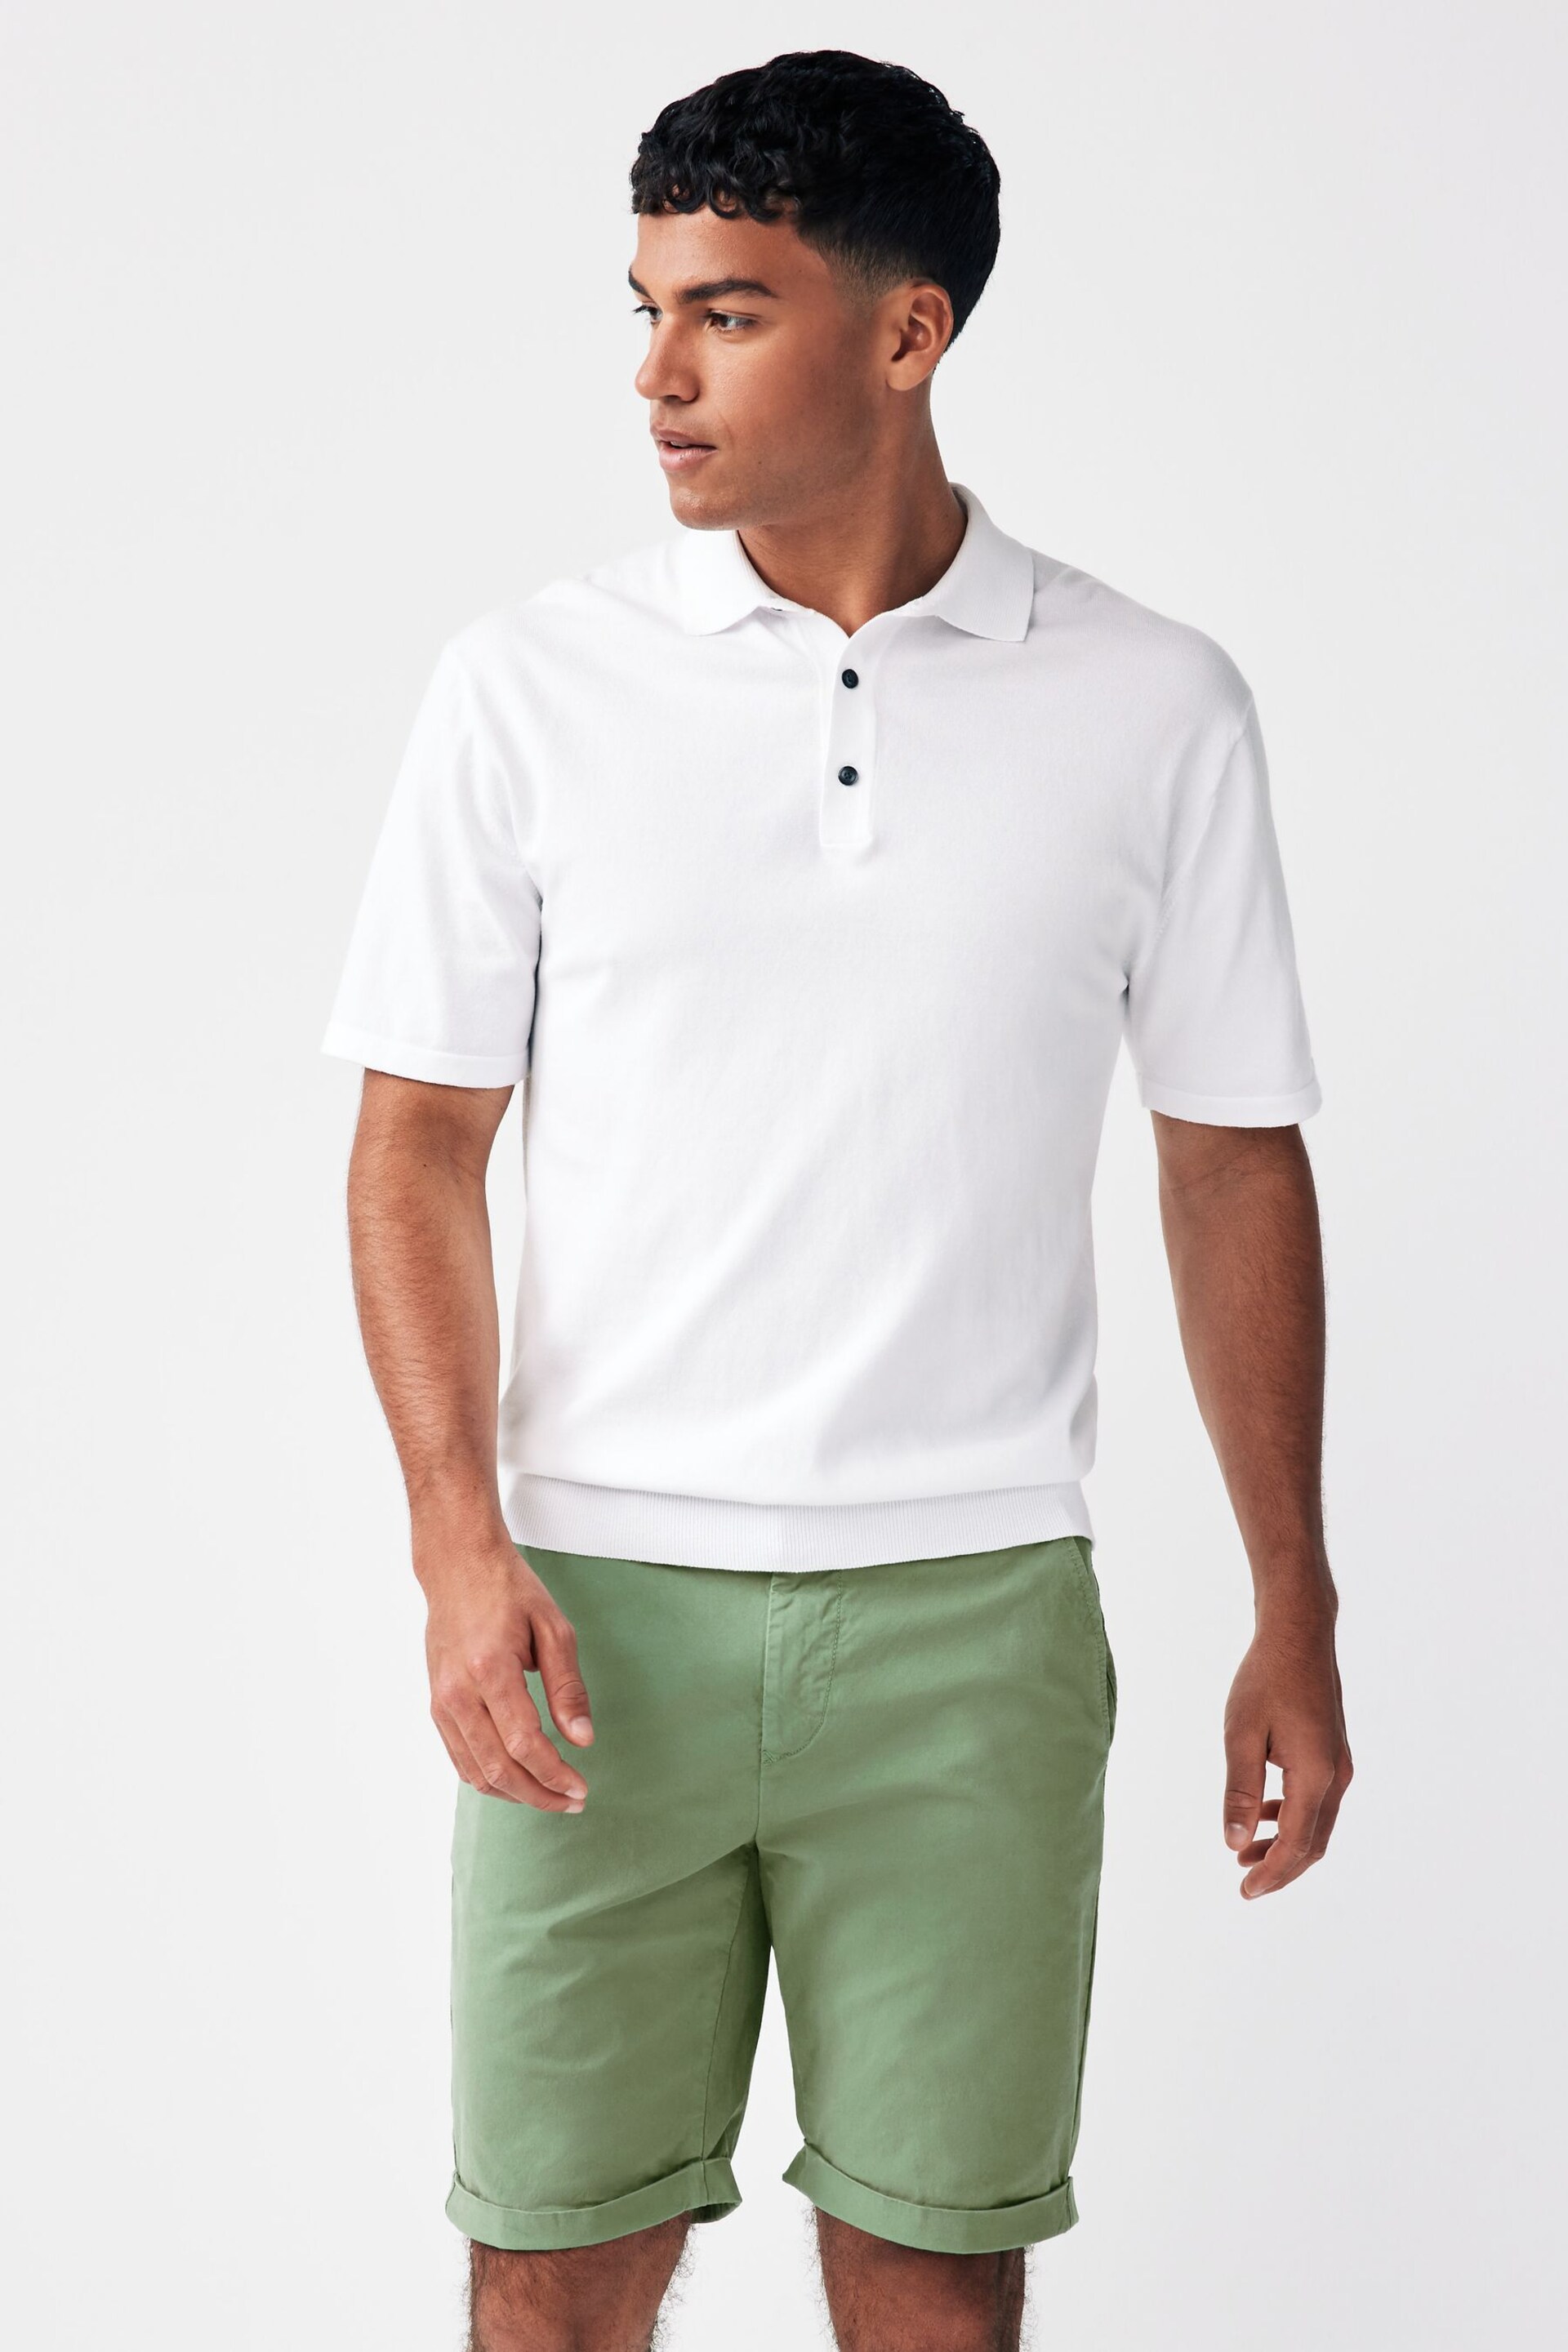 GANT Green Regular Fit Sunfaded Cotton Twill Shorts - Image 1 of 5